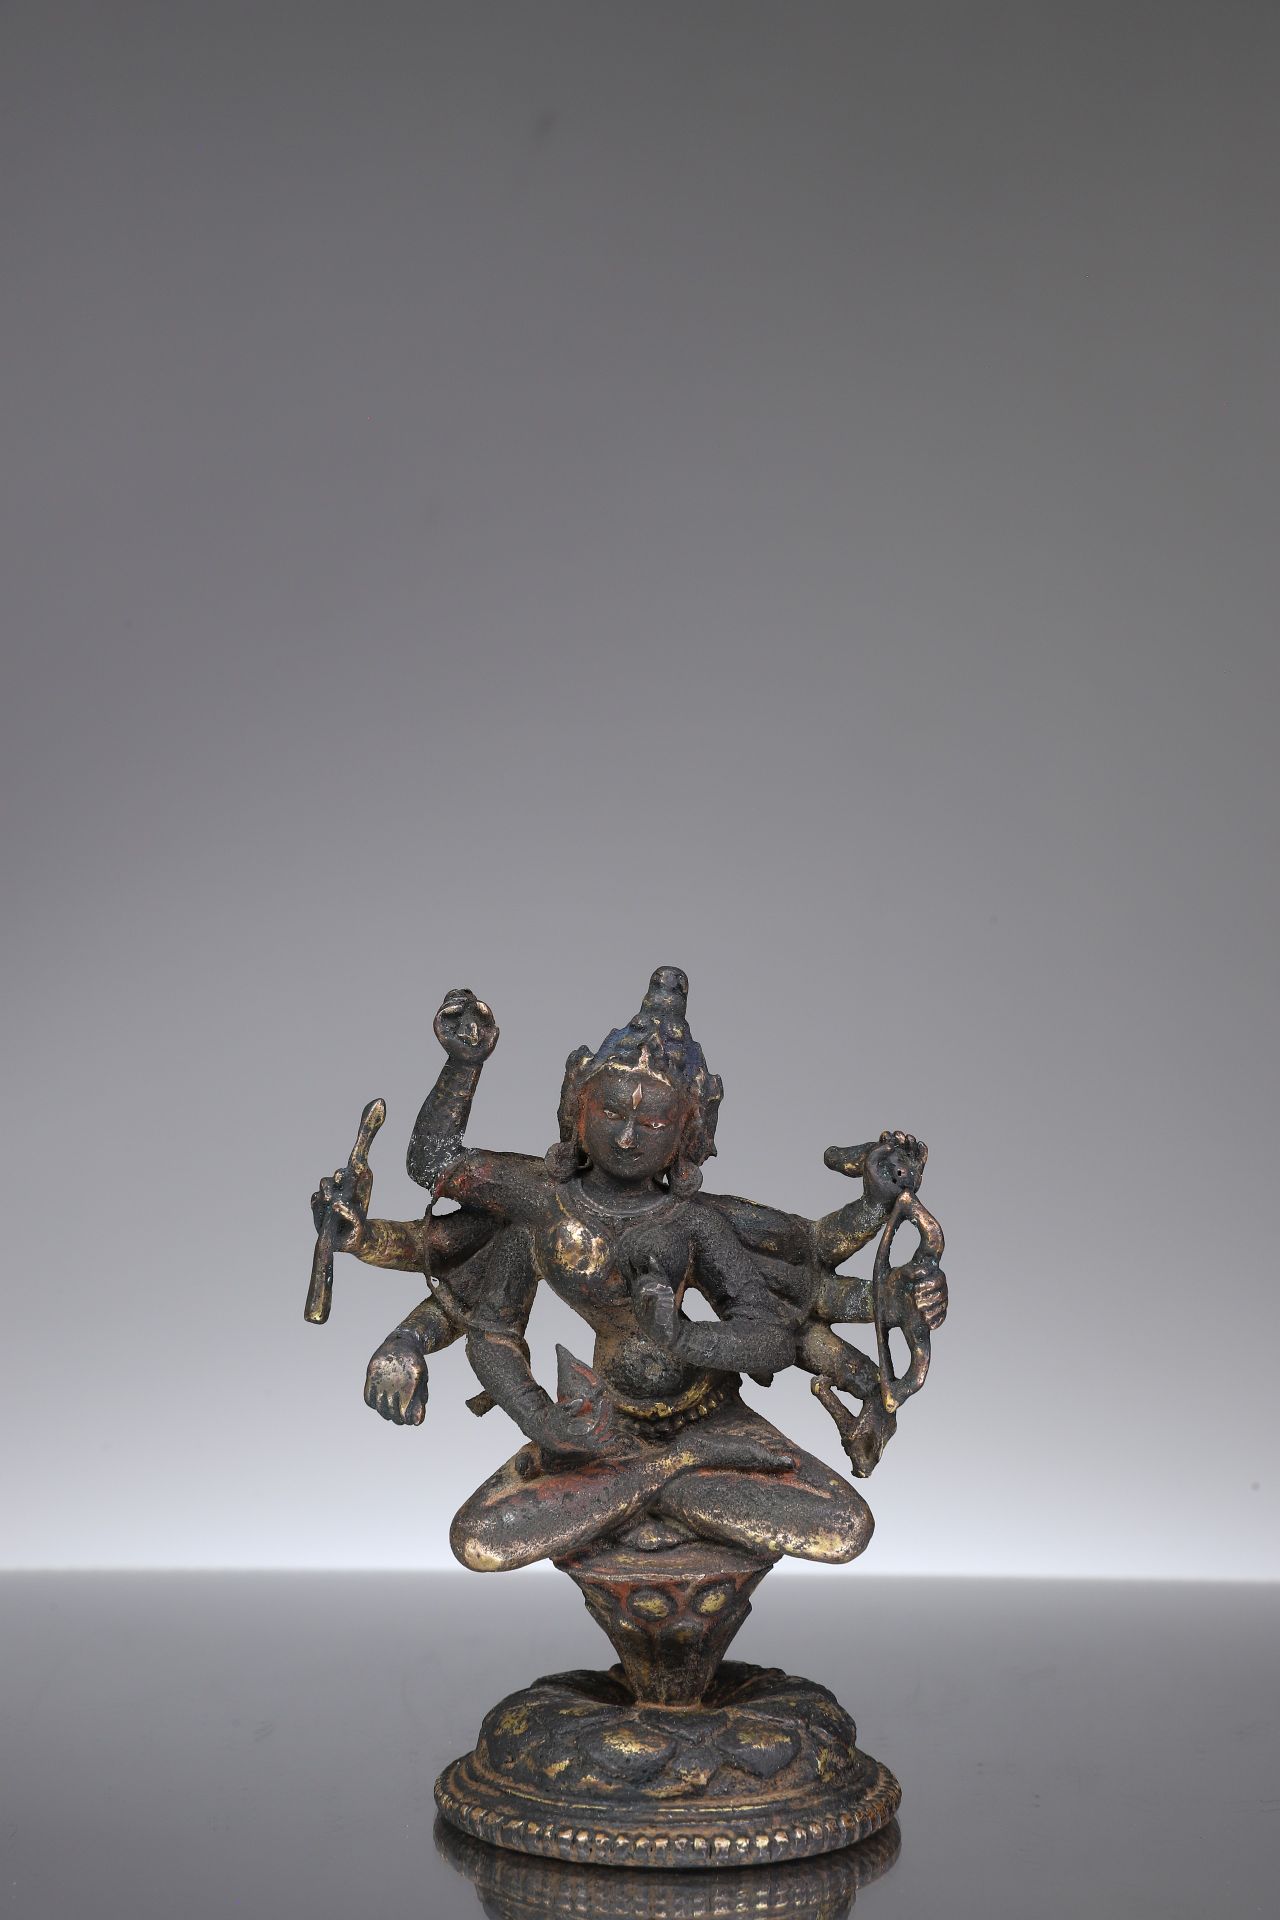 EIGHT ARMED TARA 青铜器


西藏或印度，12世纪





重量：608克





尺寸。12 x 9 x 6,5厘米





坐在高高的&hellip;